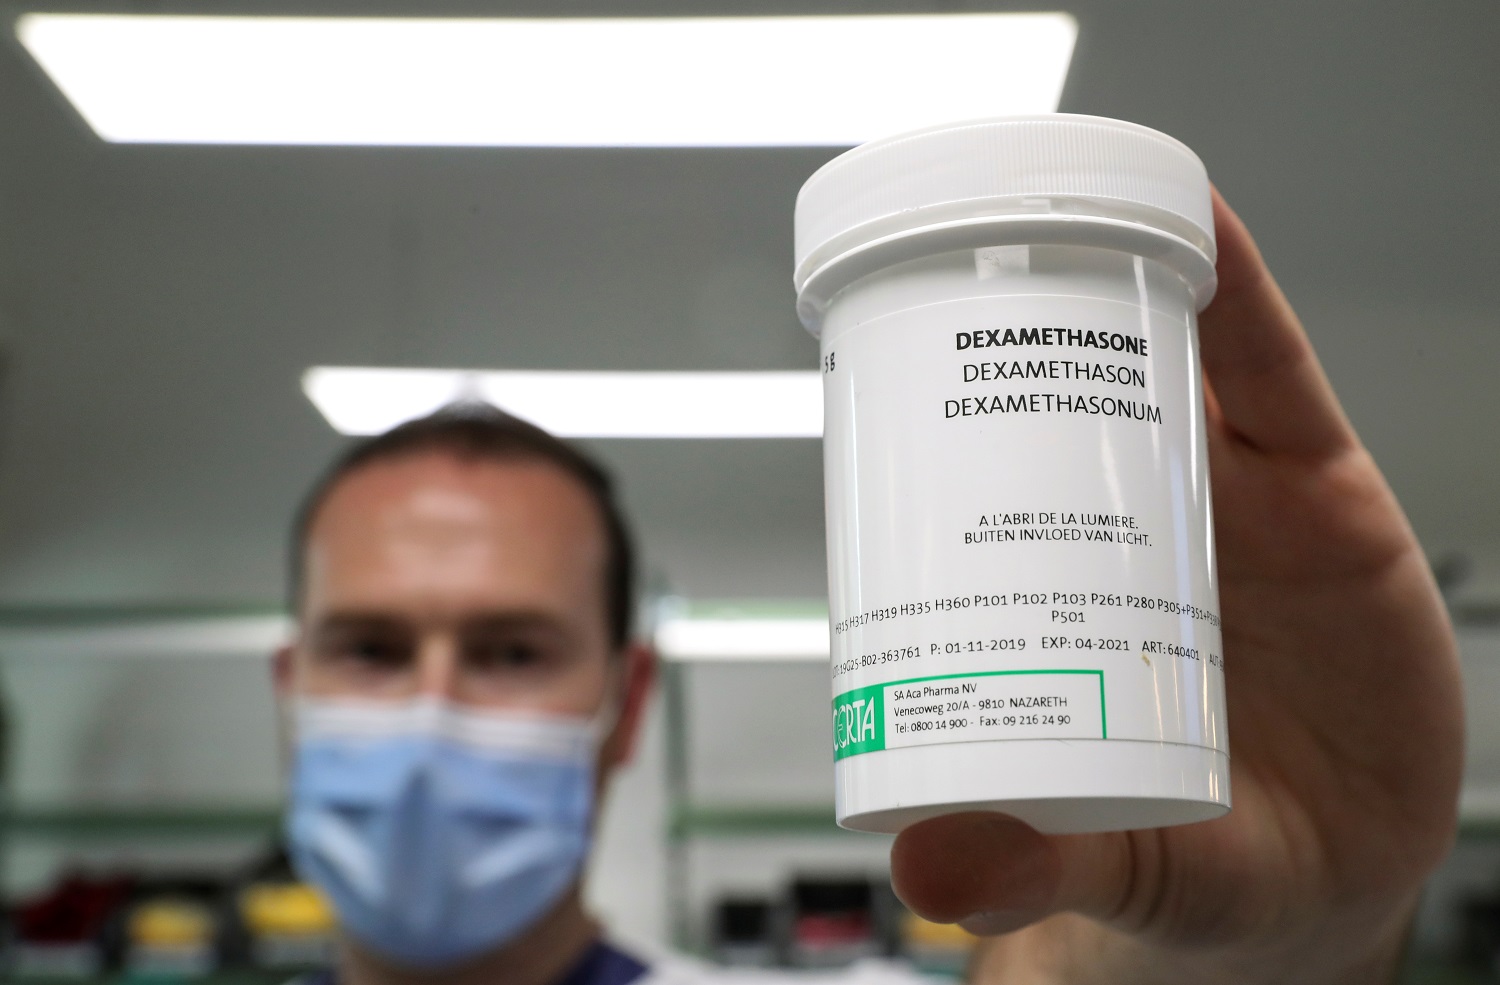 A pharmacist displays a box of Dexamethasone at the Erasme Hospital amid the coronavirus disease (COVID-19) outbreak, in Brussels